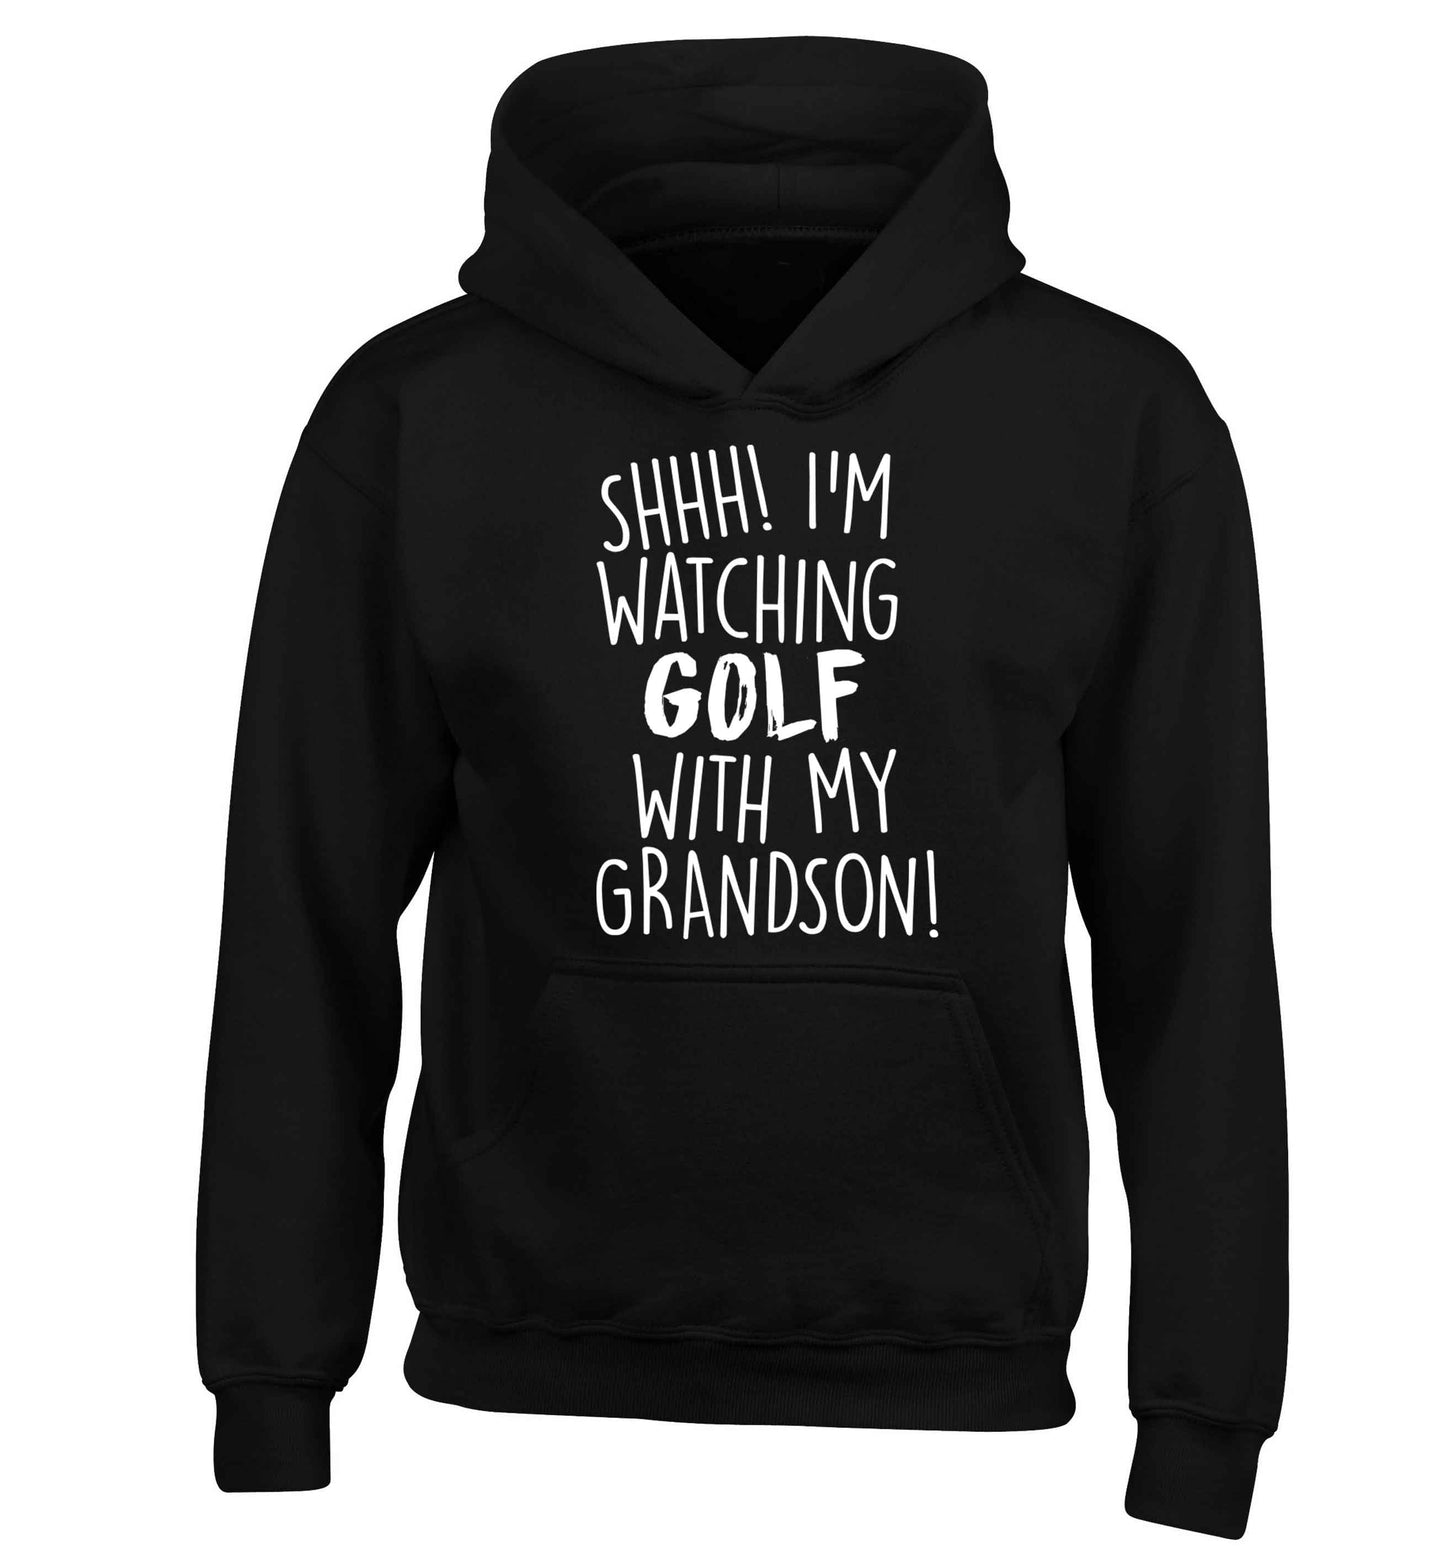 Shh I'm watching golf with my grandsonchildren's black hoodie 12-13 Years